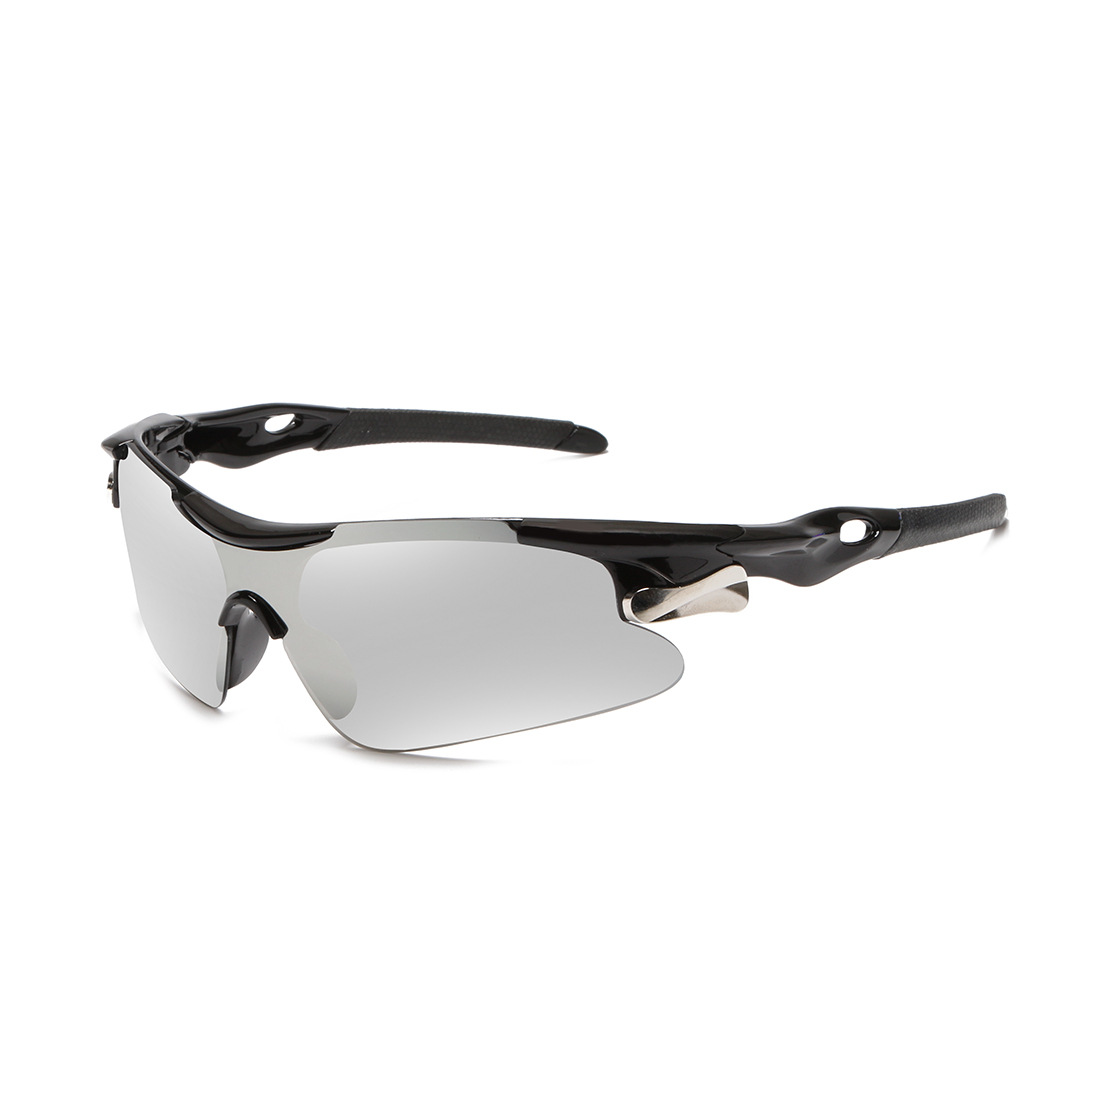 Men's Outdoor Sunglasses Sports Glasses Bicycle Glasses Windproof Sunglasses Glasses for Riding Women's Sunglasses 9206